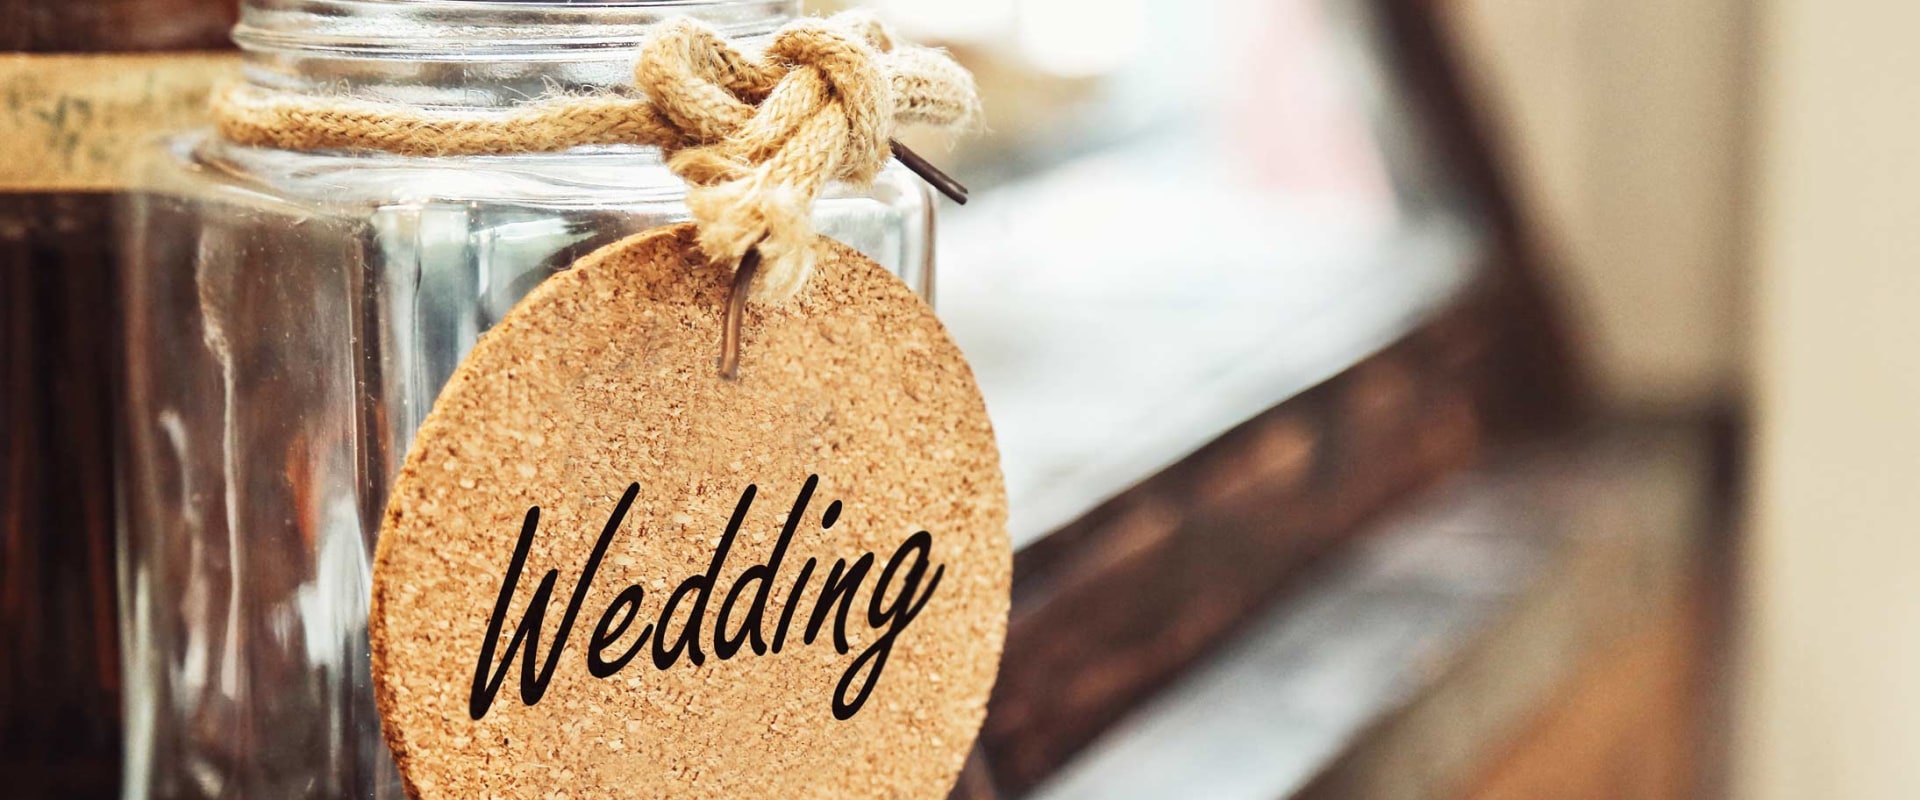 DIY Ideas to Save Money on Weddings